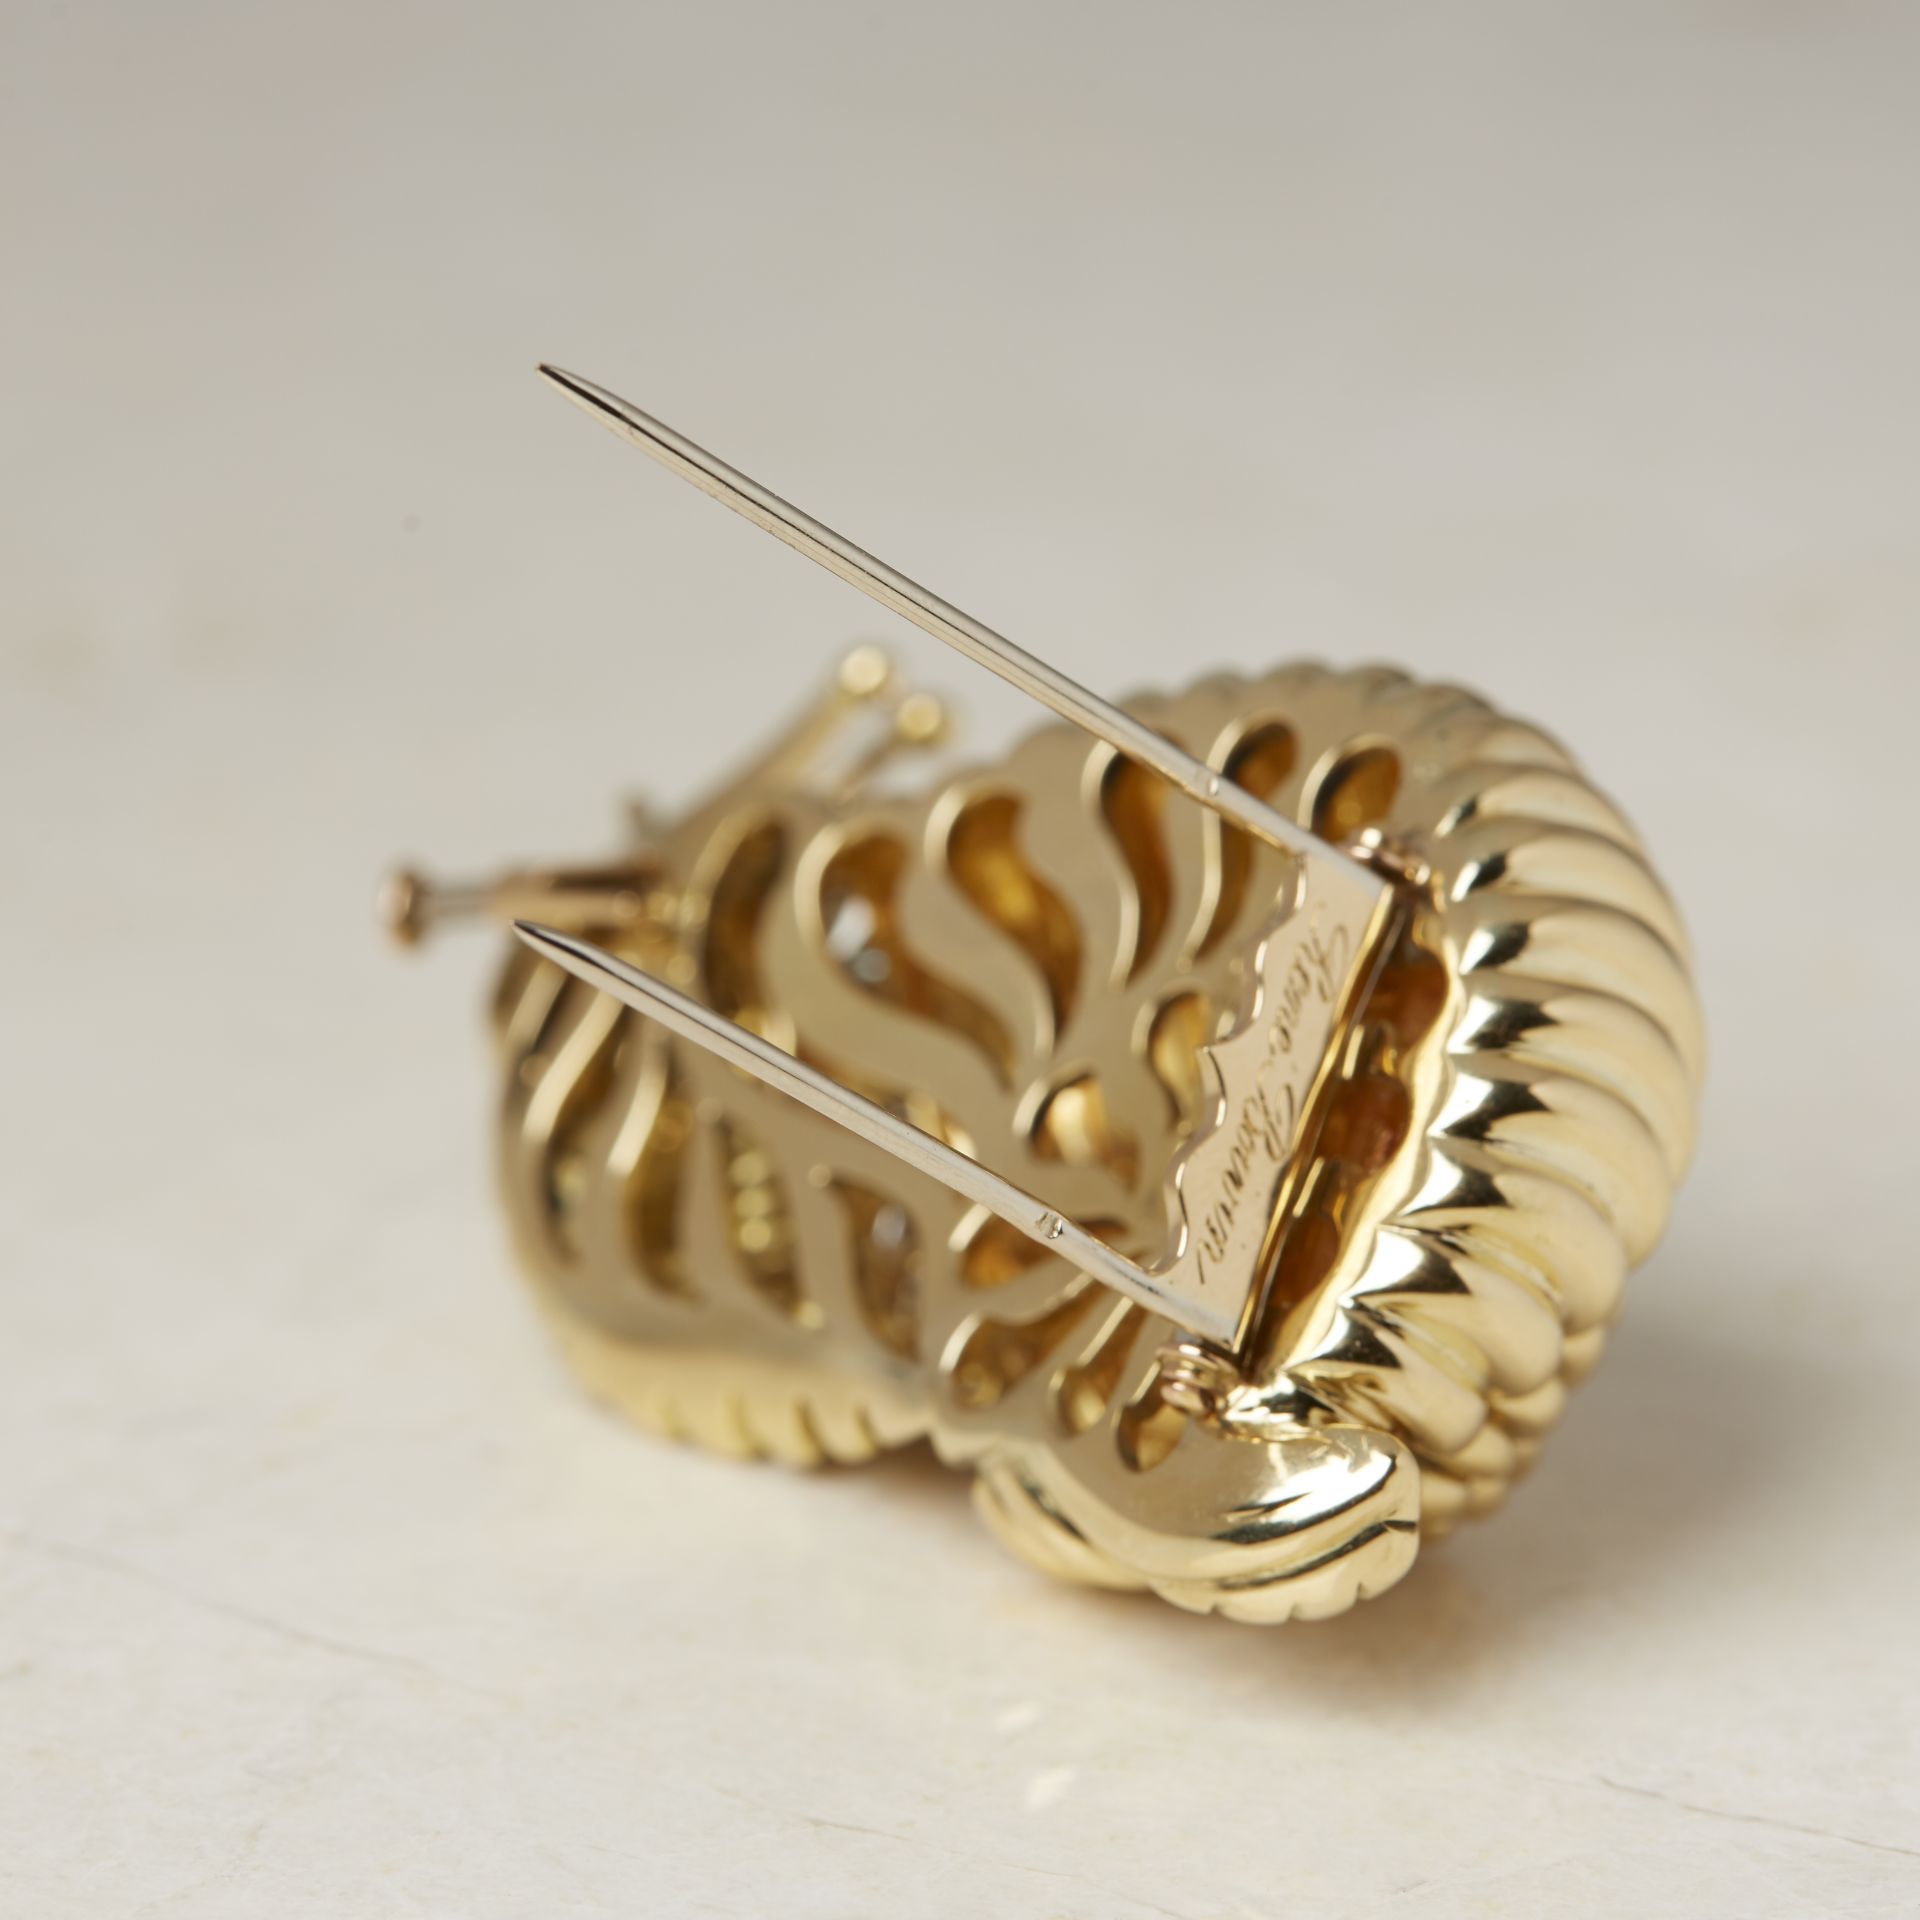 Rene Boivin 18k Yellow Gold Diamond Snail Brooch with Presentation Box - Image 13 of 19